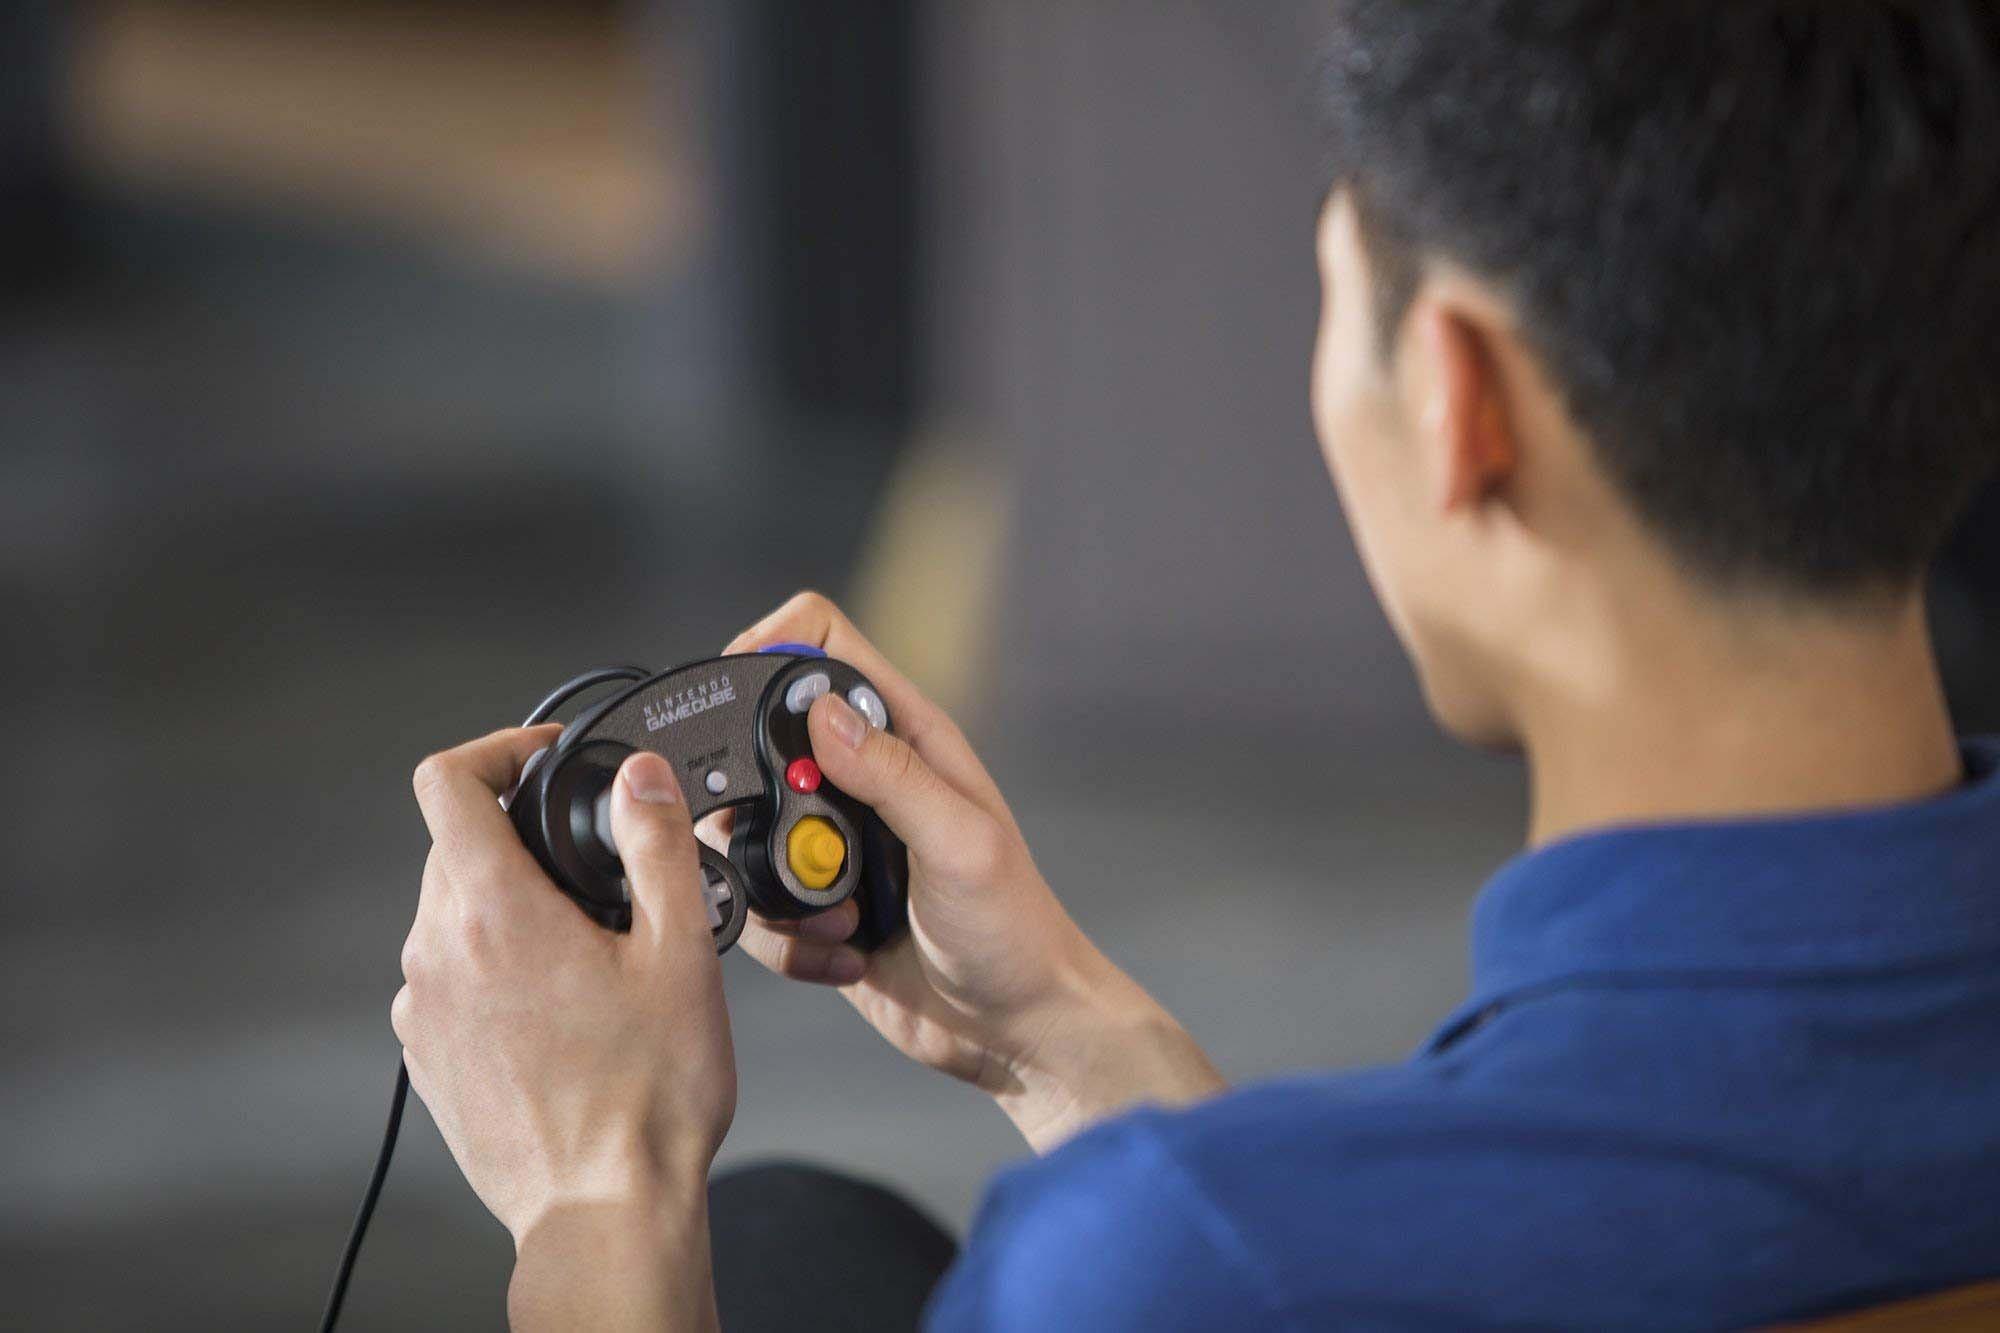 PowerA Super Smash Bros. Ultimate Edition GameCube Controller